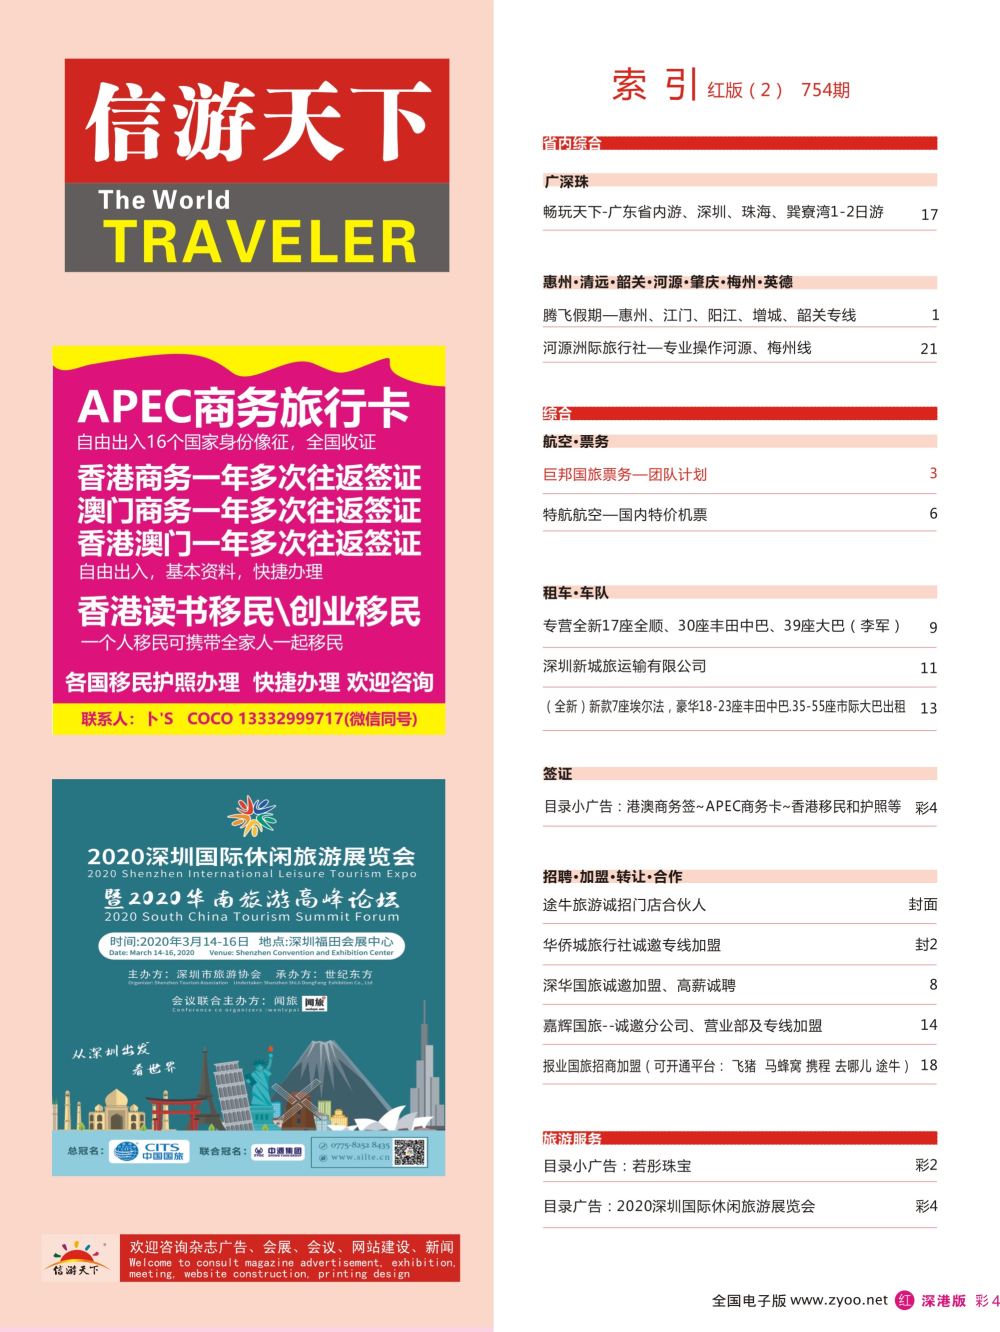 r彩004  港澳商务签~APEC商务卡~香港移民和护照等